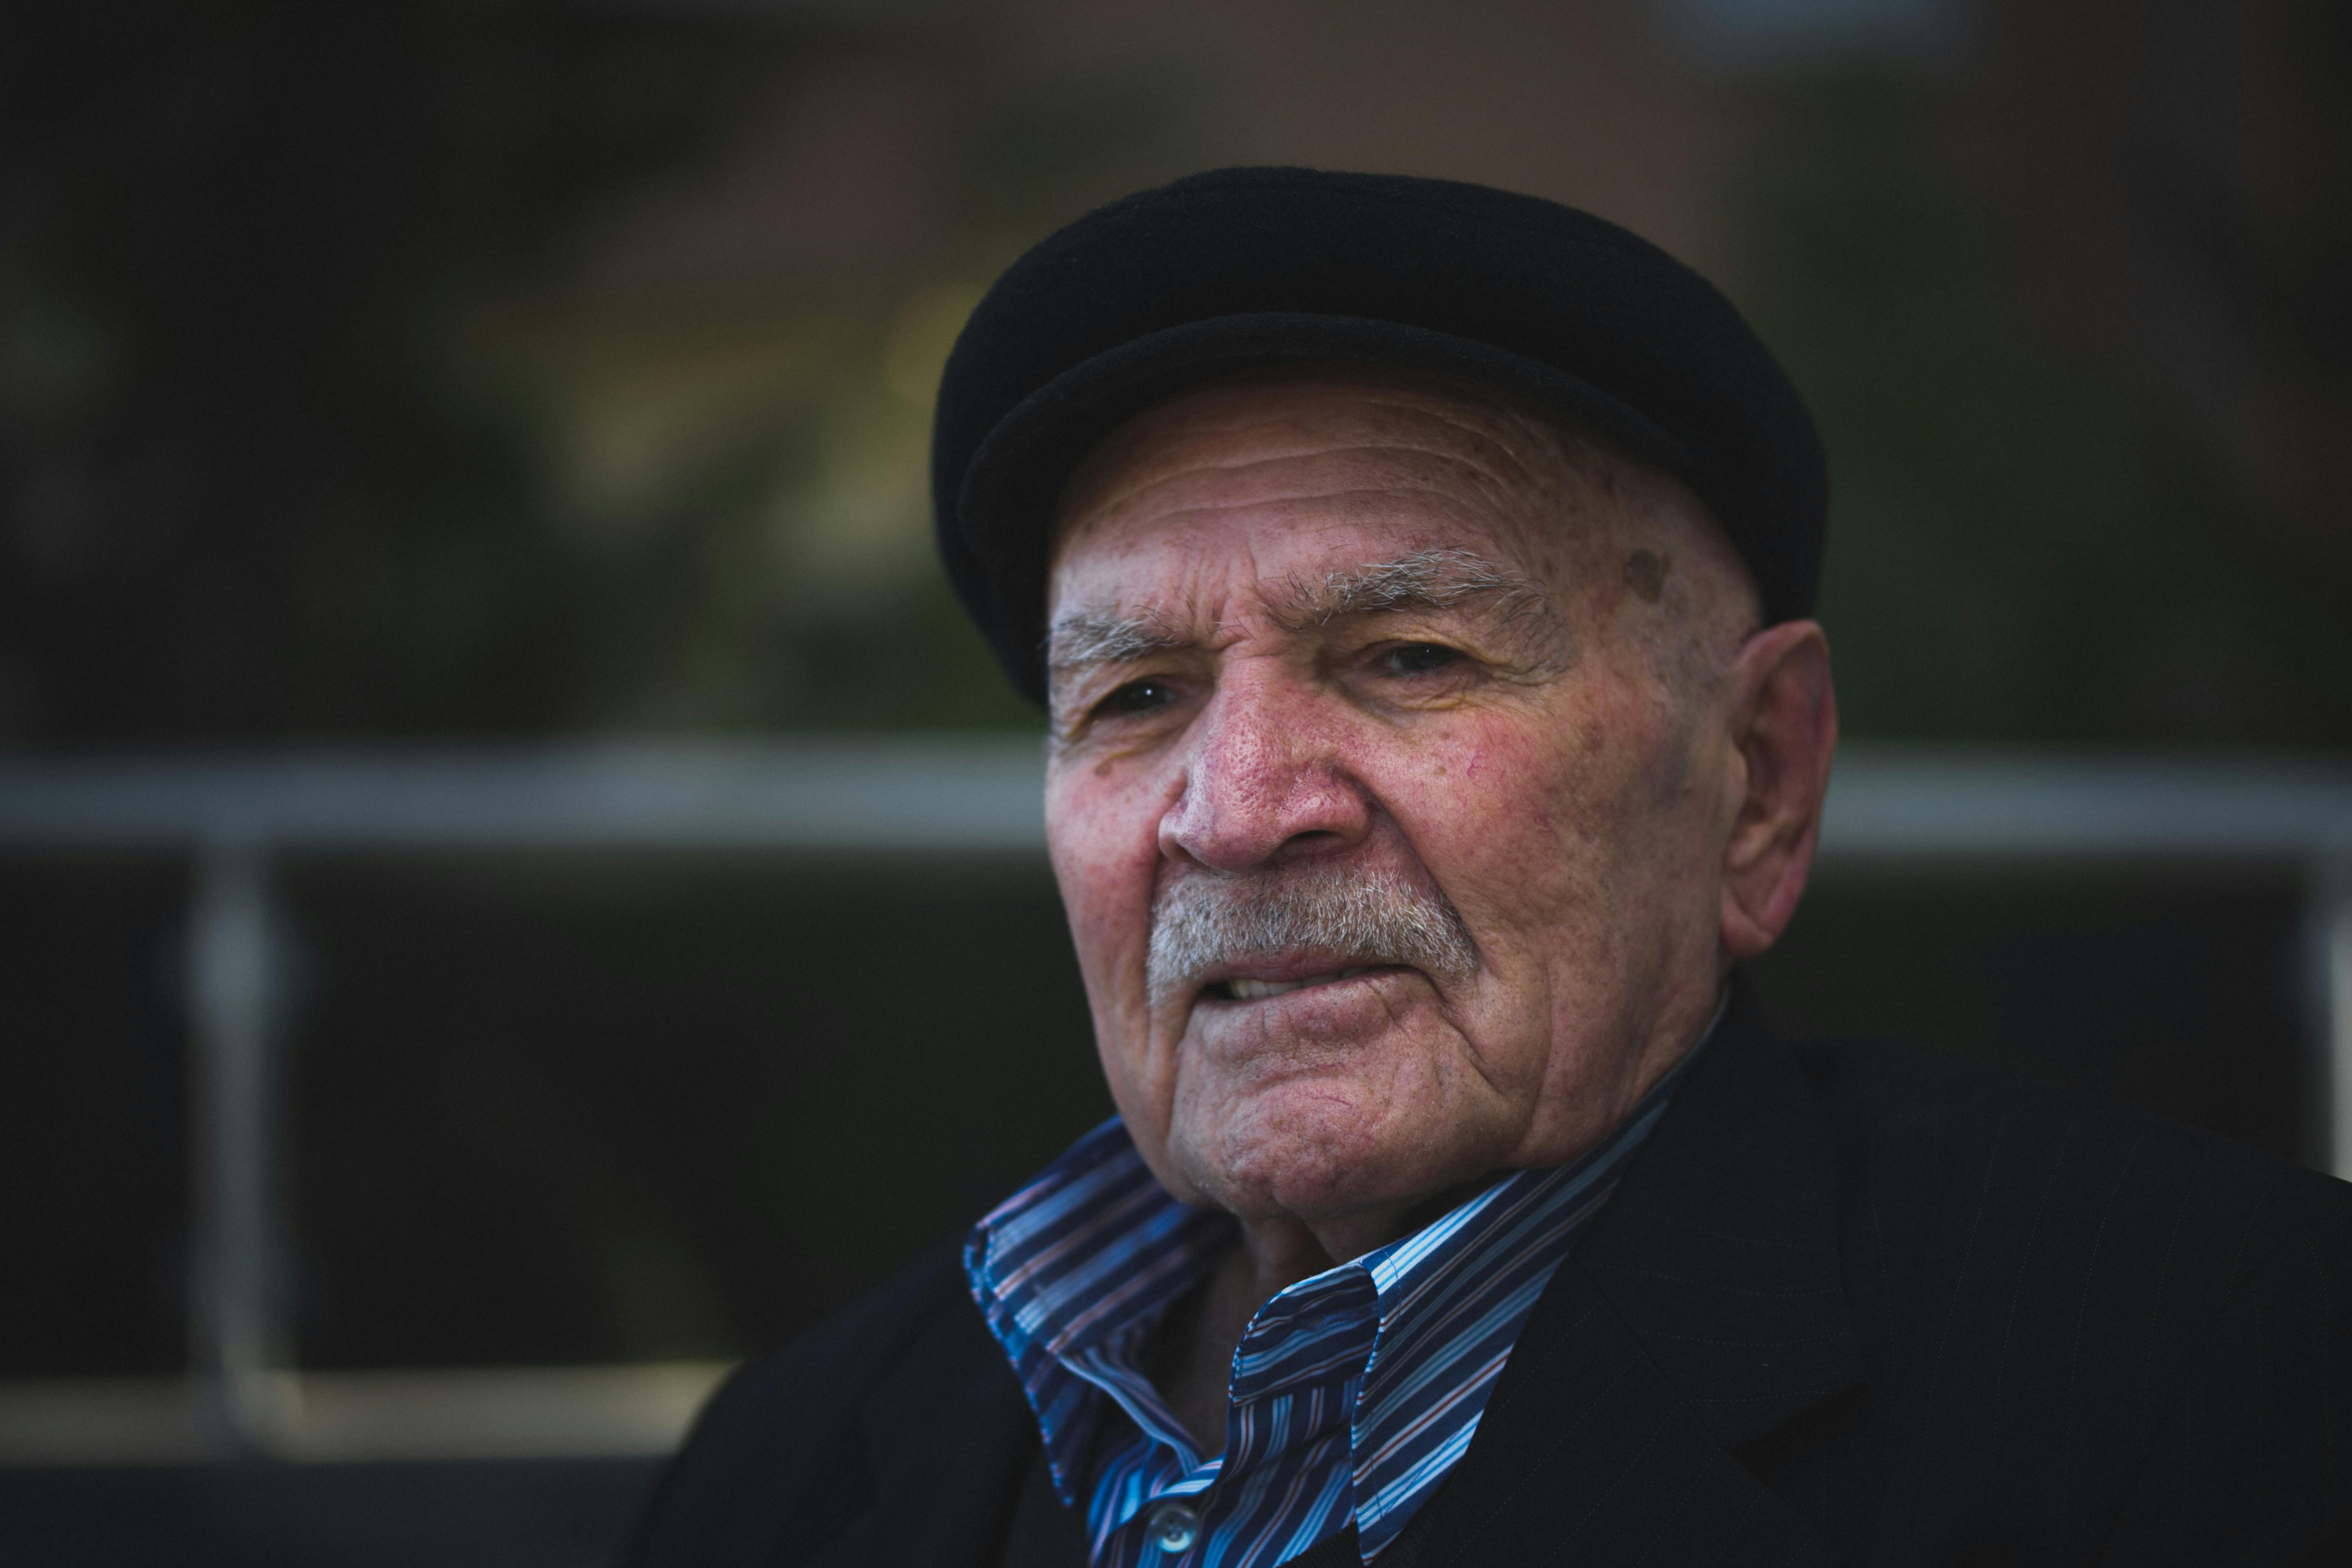 An older man | Source: Pexels